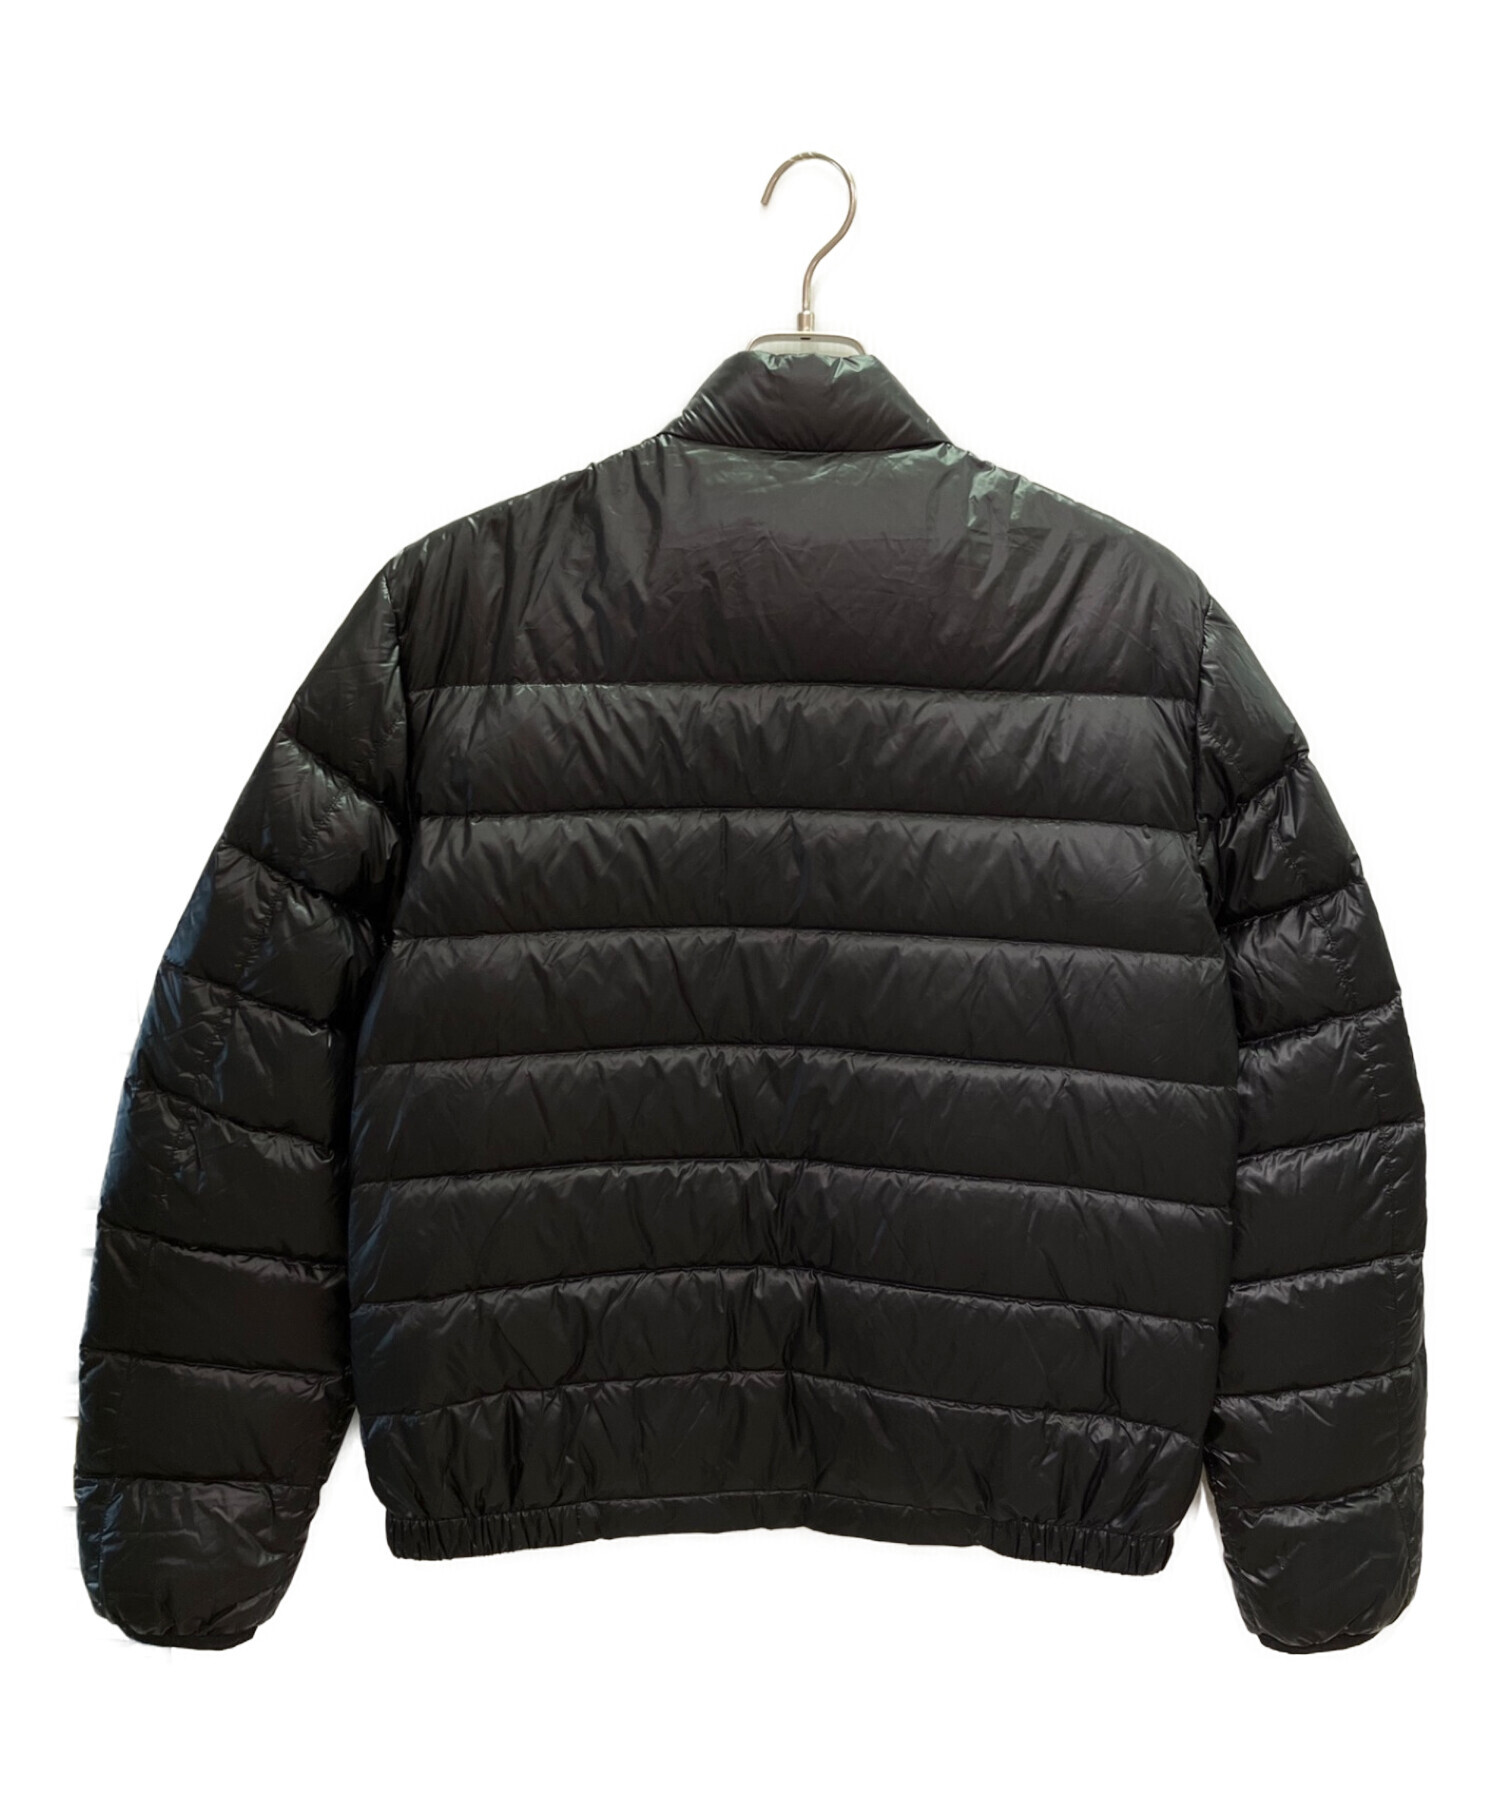 PRADA (プラダ) 袖プレートダウンジャケット ブラック サイズ:50